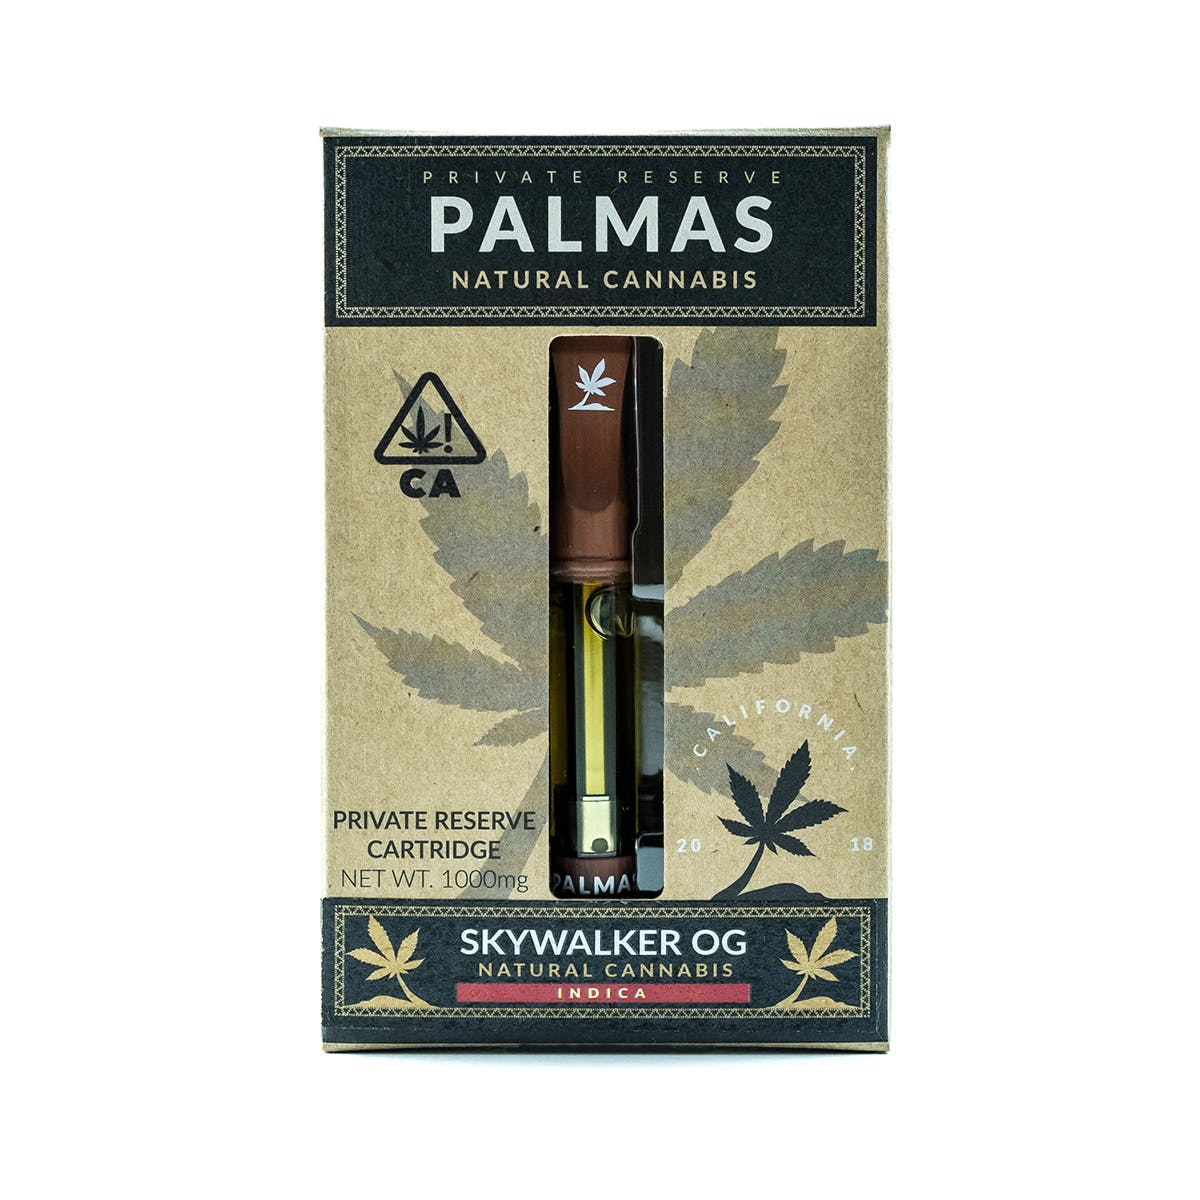 marijuana-dispensaries-og-central-20-cap-in-los-angeles-palmas-private-reserve-cartridge-skywalker-og